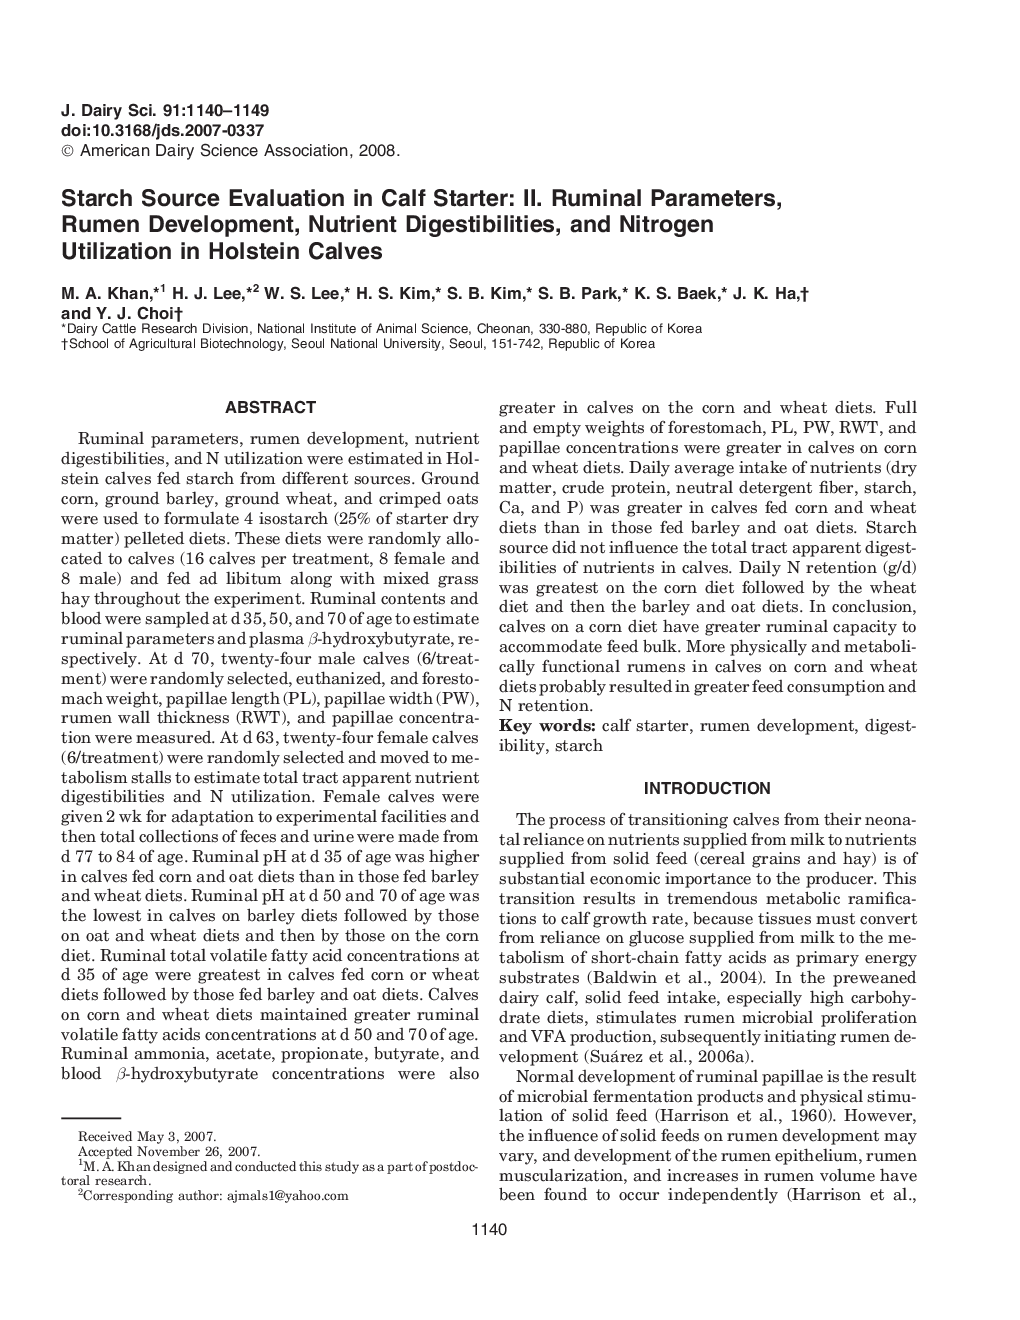 Starch Source Evaluation in Calf Starter: II. Ruminal Parameters, Rumen Development, Nutrient Digestibilities, and Nitrogen Utilization in Holstein Calves